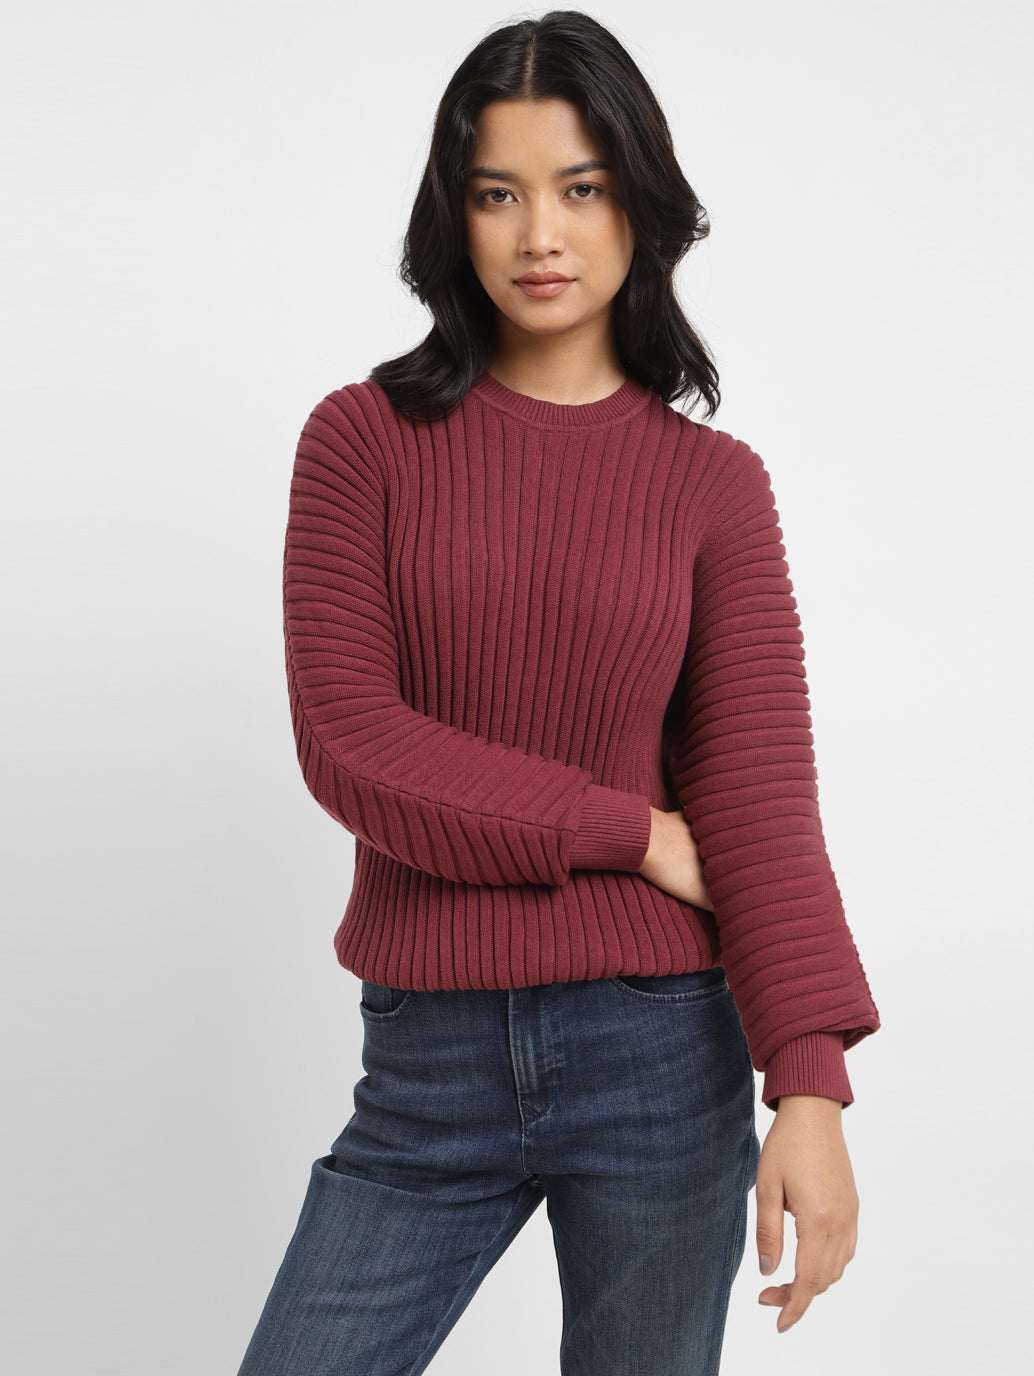 Women's Self Design Maroon Crew Neck Sweater